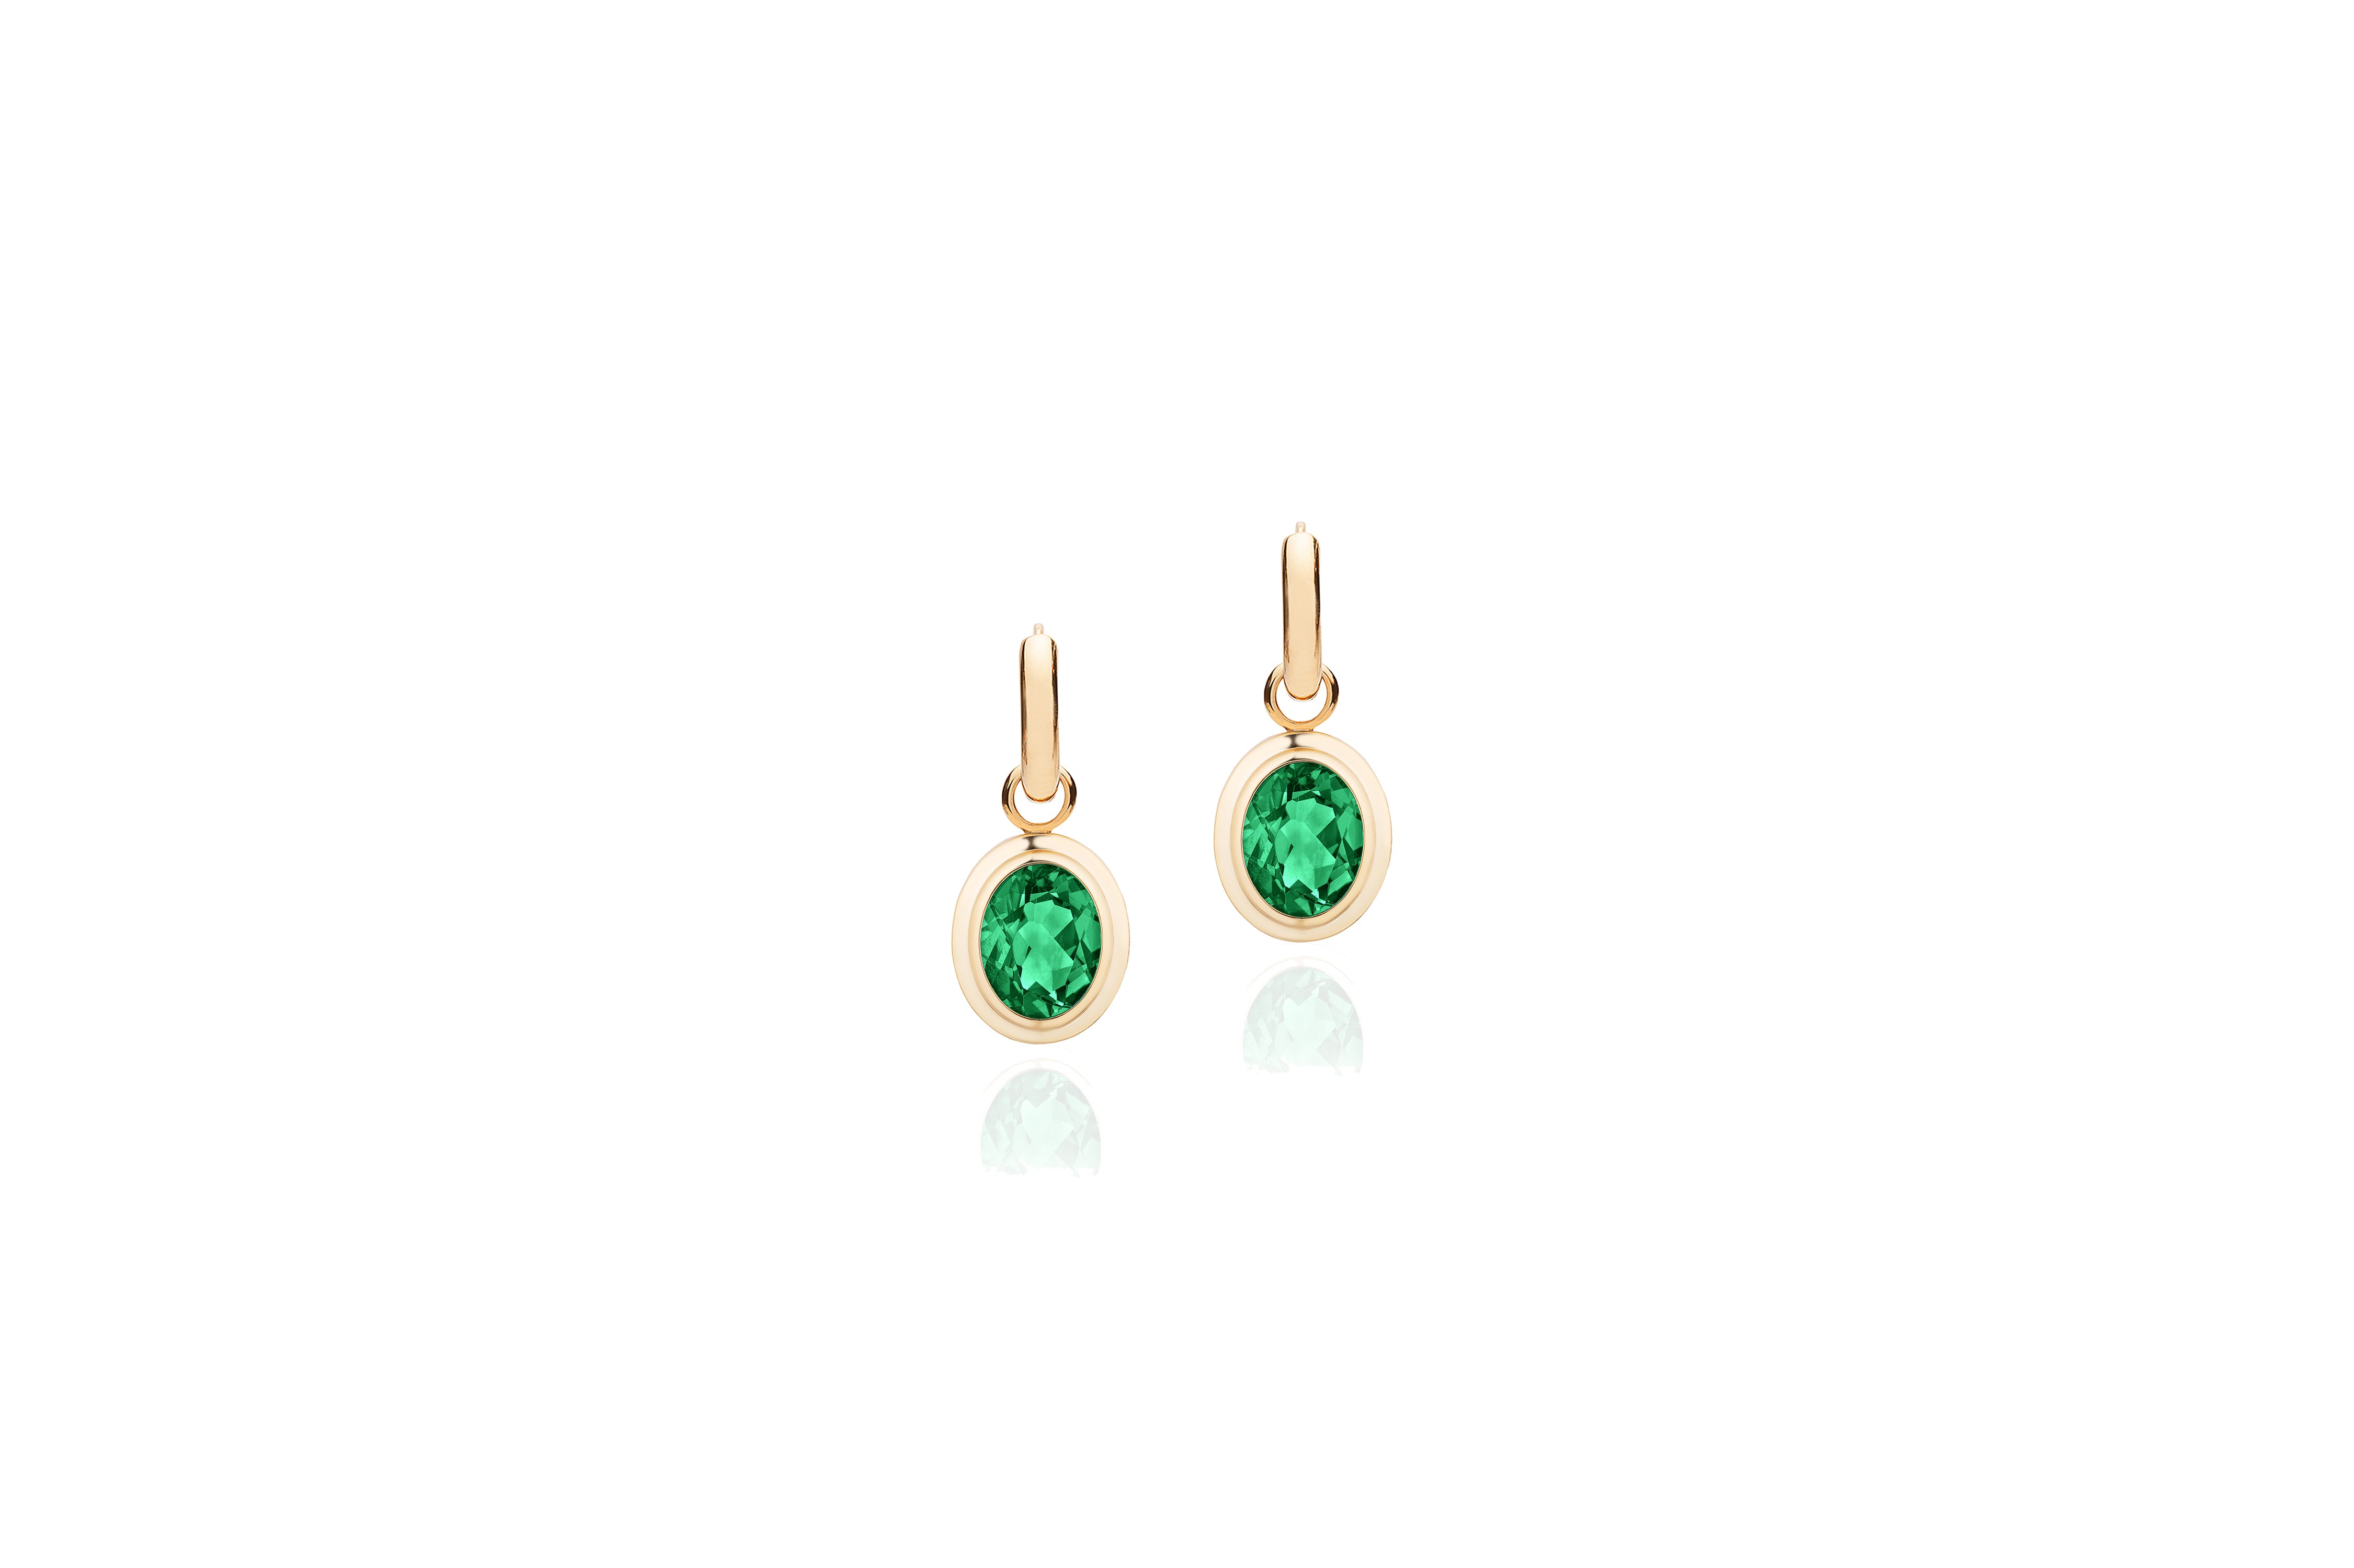 Faceted Oval Emerald Earring with Small Hoop Drop Earrings Goshwara   